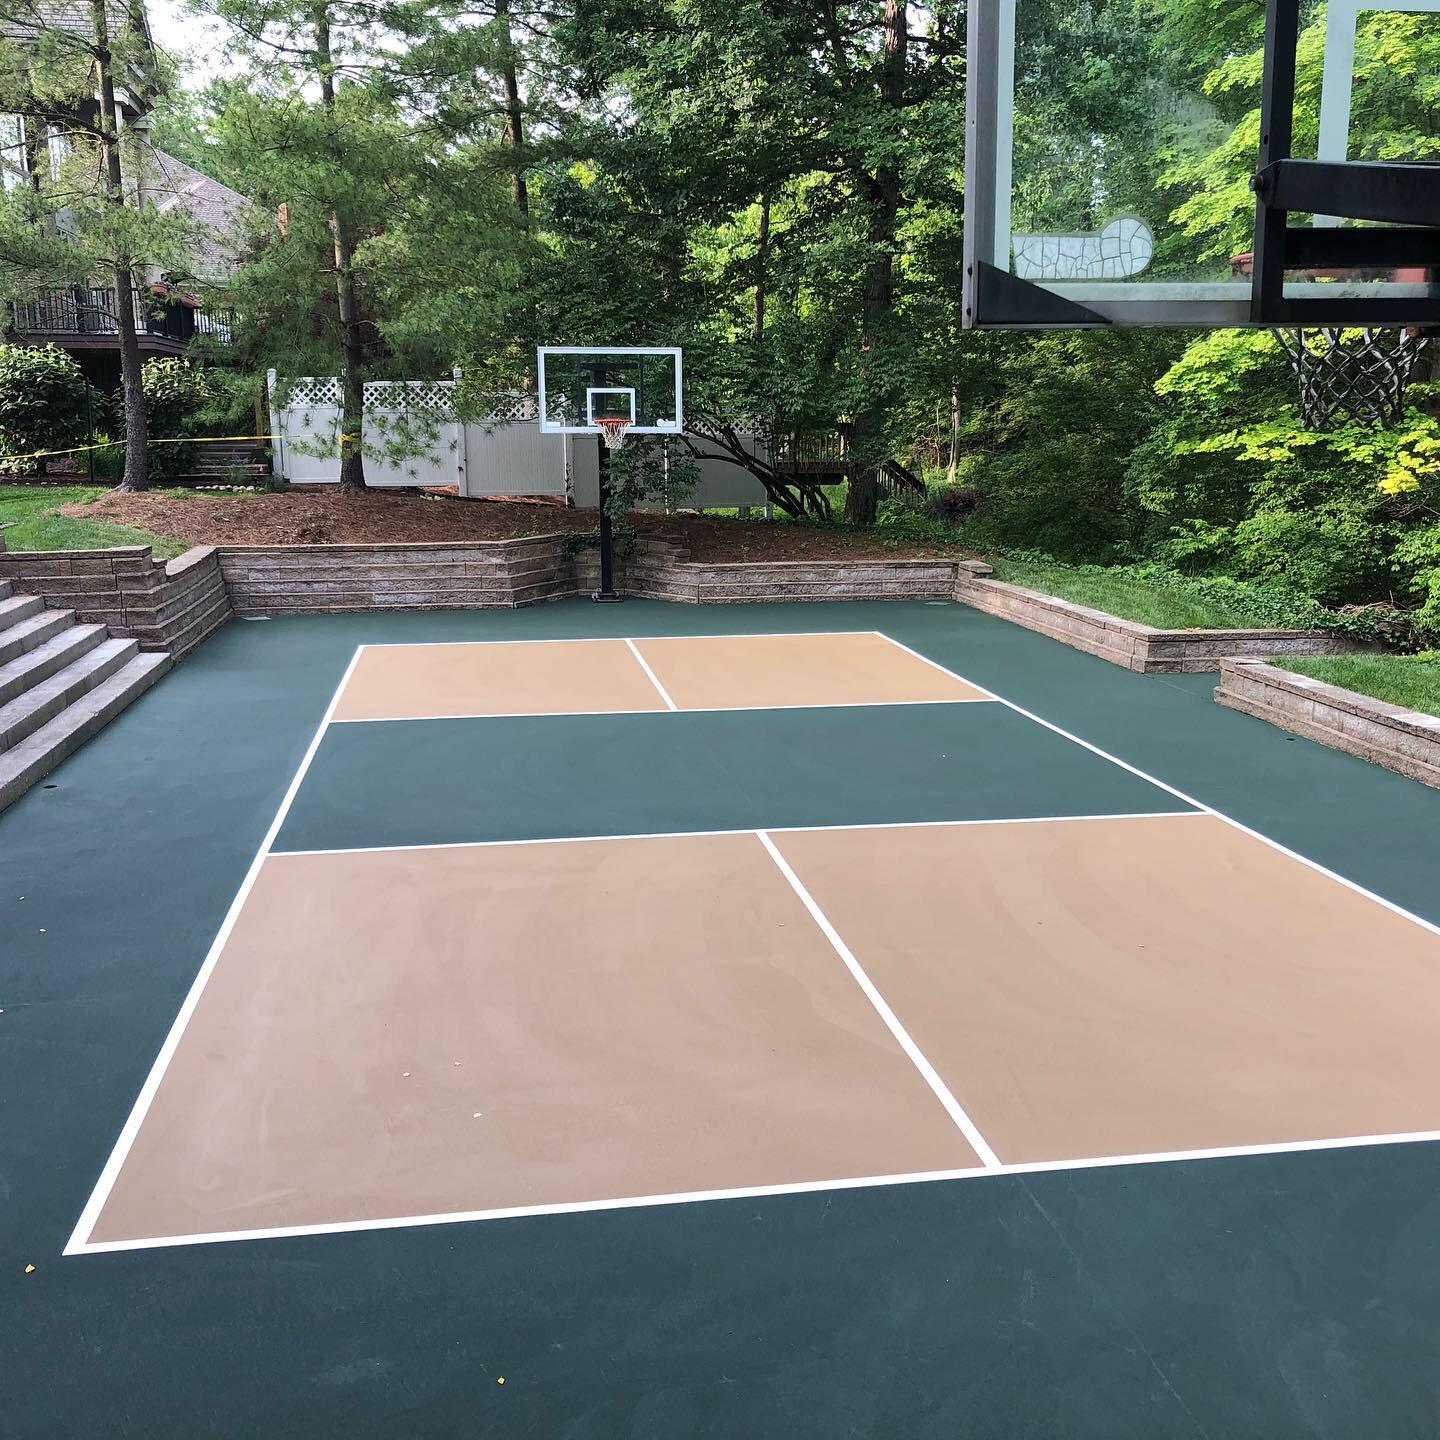 New Courts - Commercial or Residential. We are now serving Cincinnati, Columbus, Dayton, Cleveland a Schubert Tennis LLC Cincinnati (513)310-5890